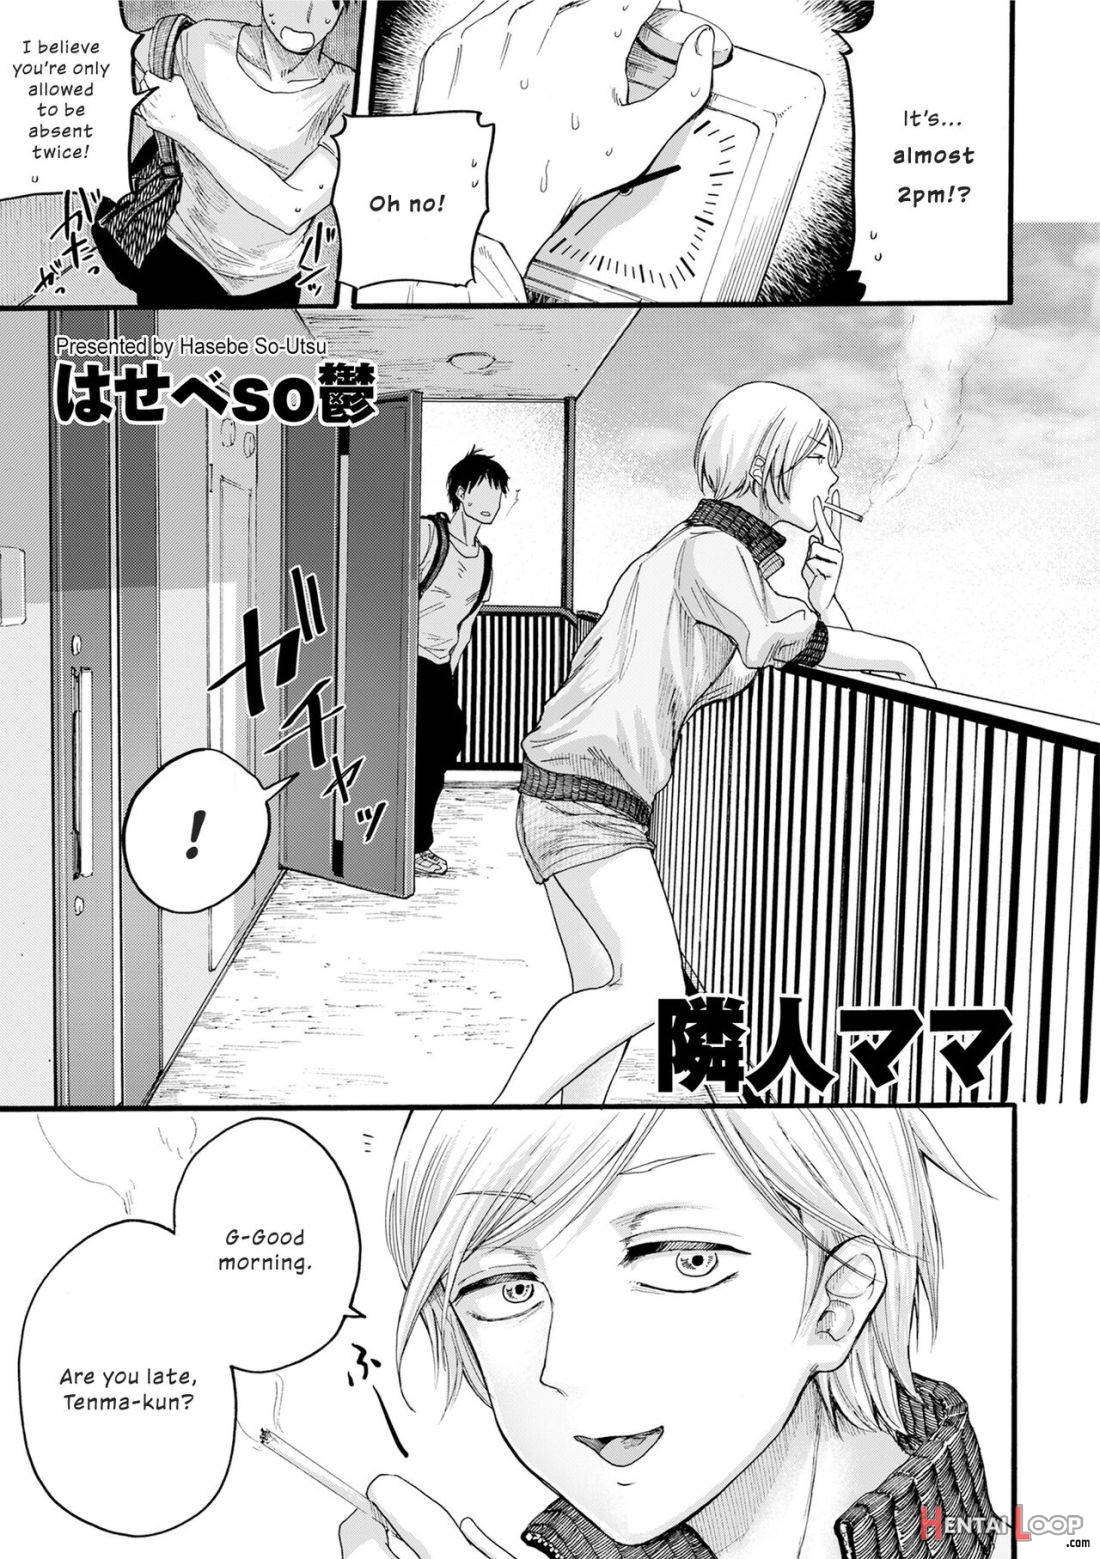 Rinjin Mama page 1